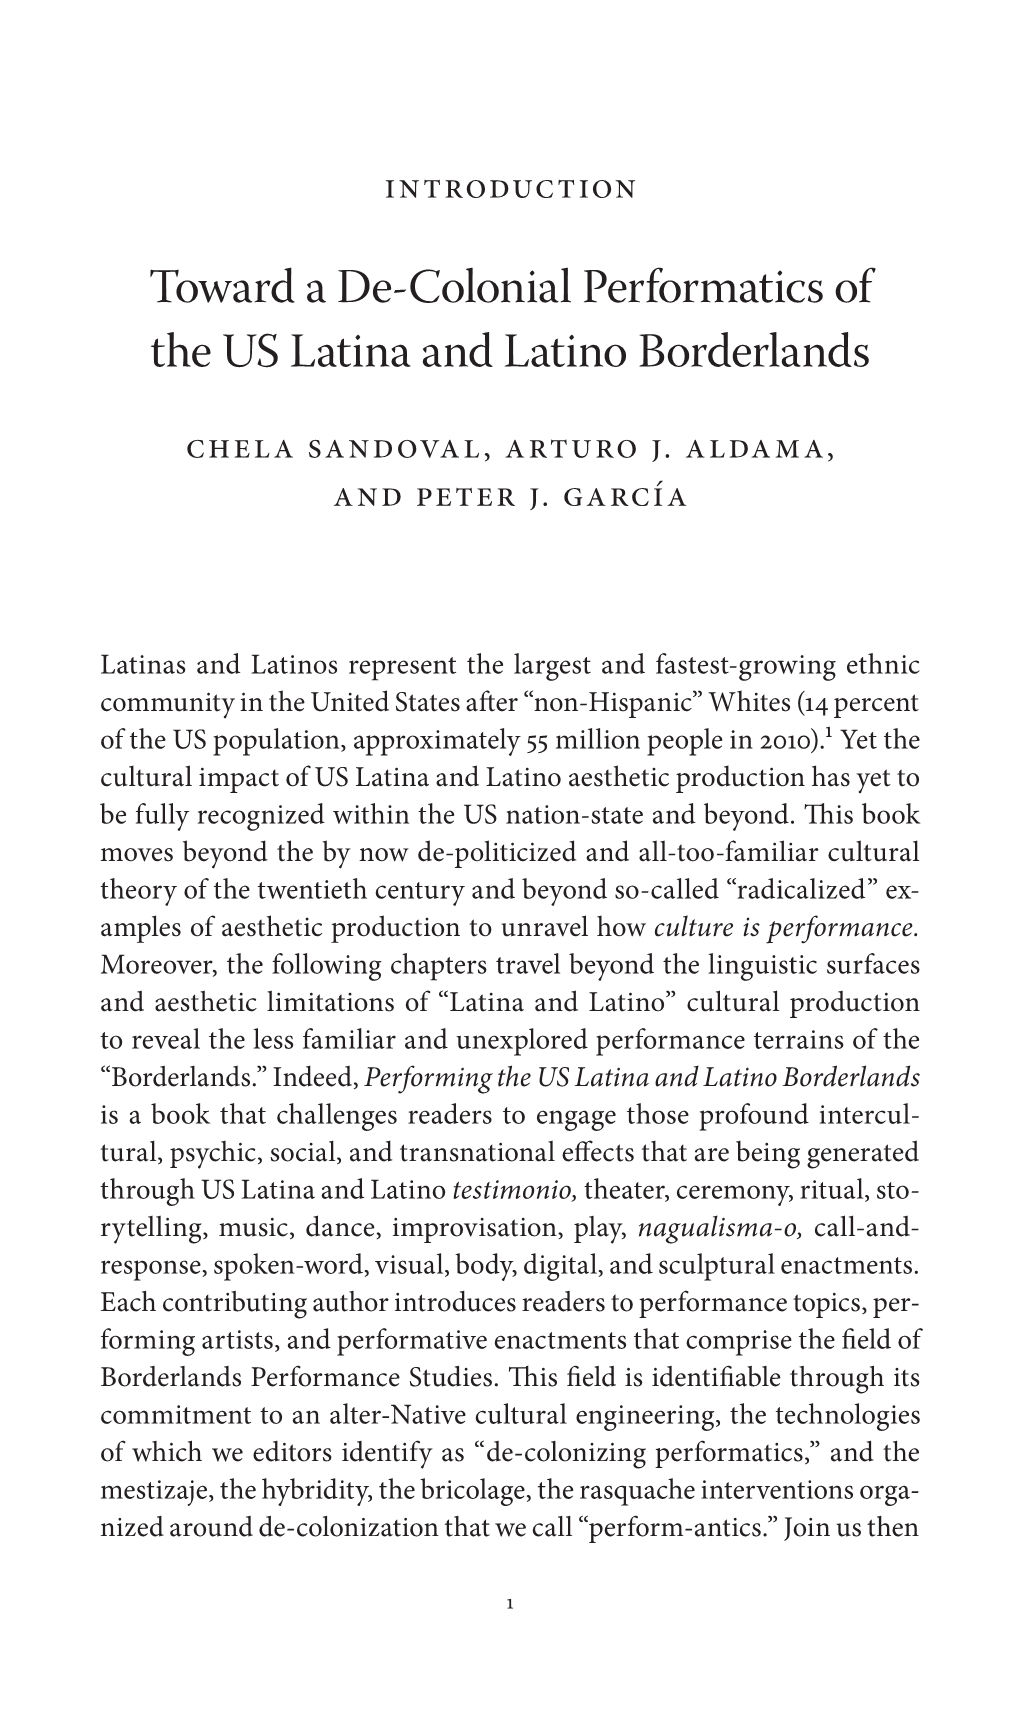 Toward a De-Colonial Performatics of the US Latina and Latino Borderlands